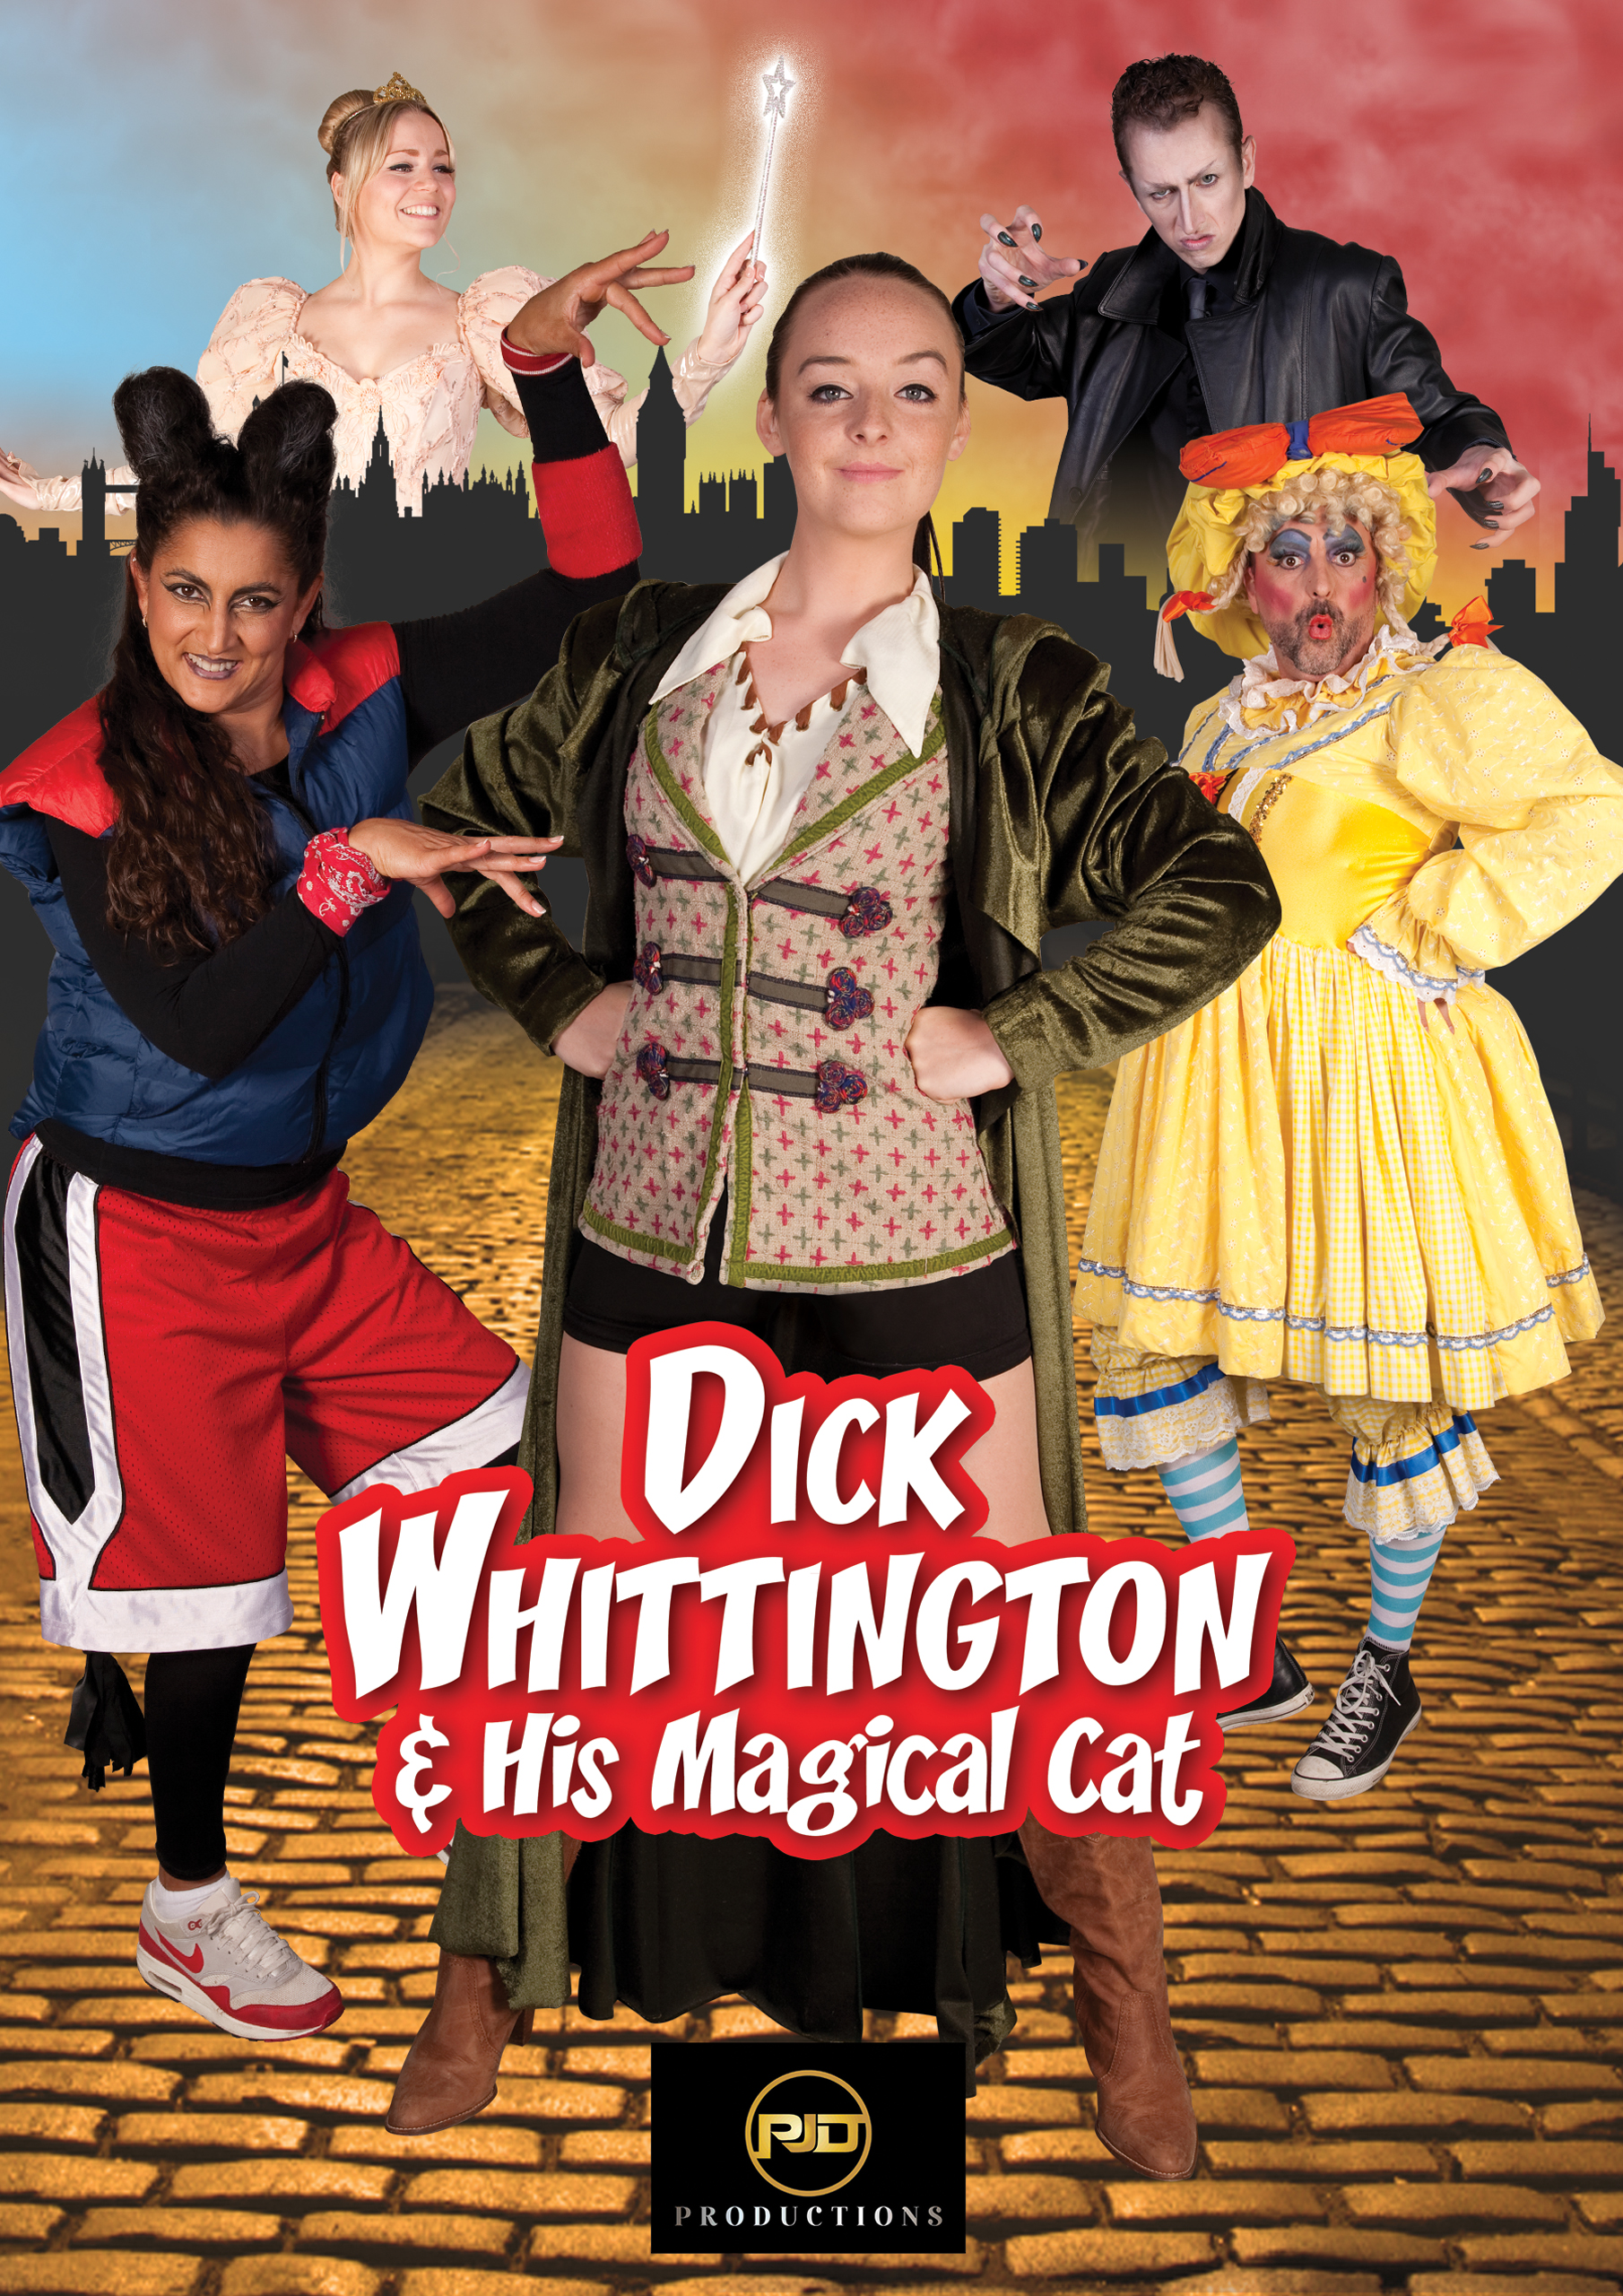 Dick Whittington panto image